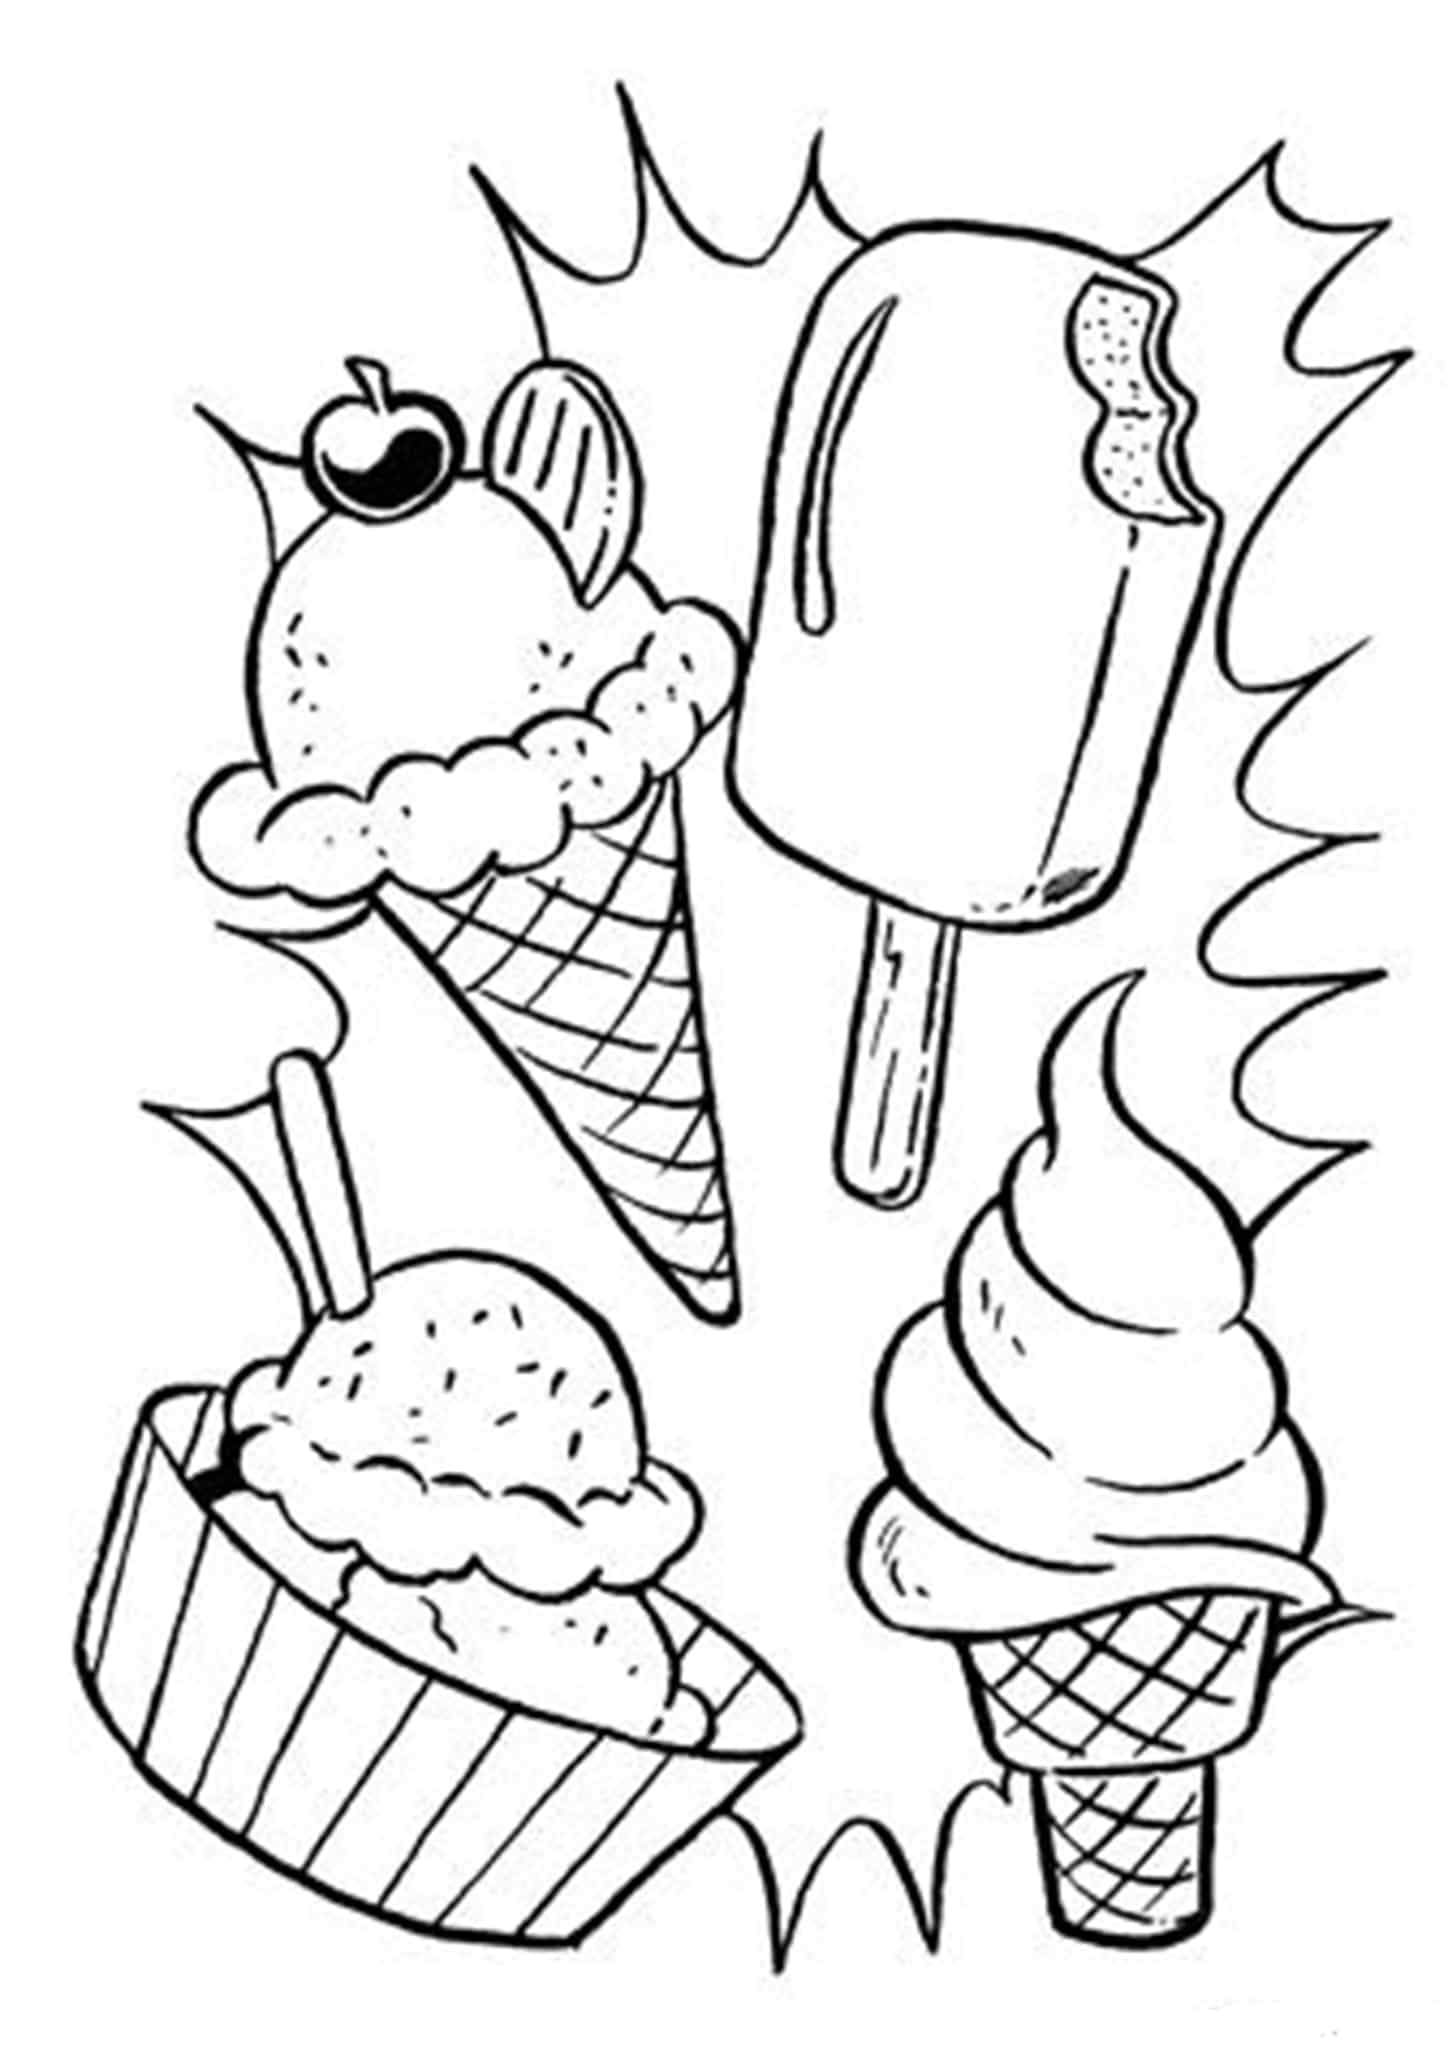 Раскраска мороженки. Раскраска мороженое. Мороженое раскраска для детей. Раскраска мороженгог. Раскраски лето мороженое.